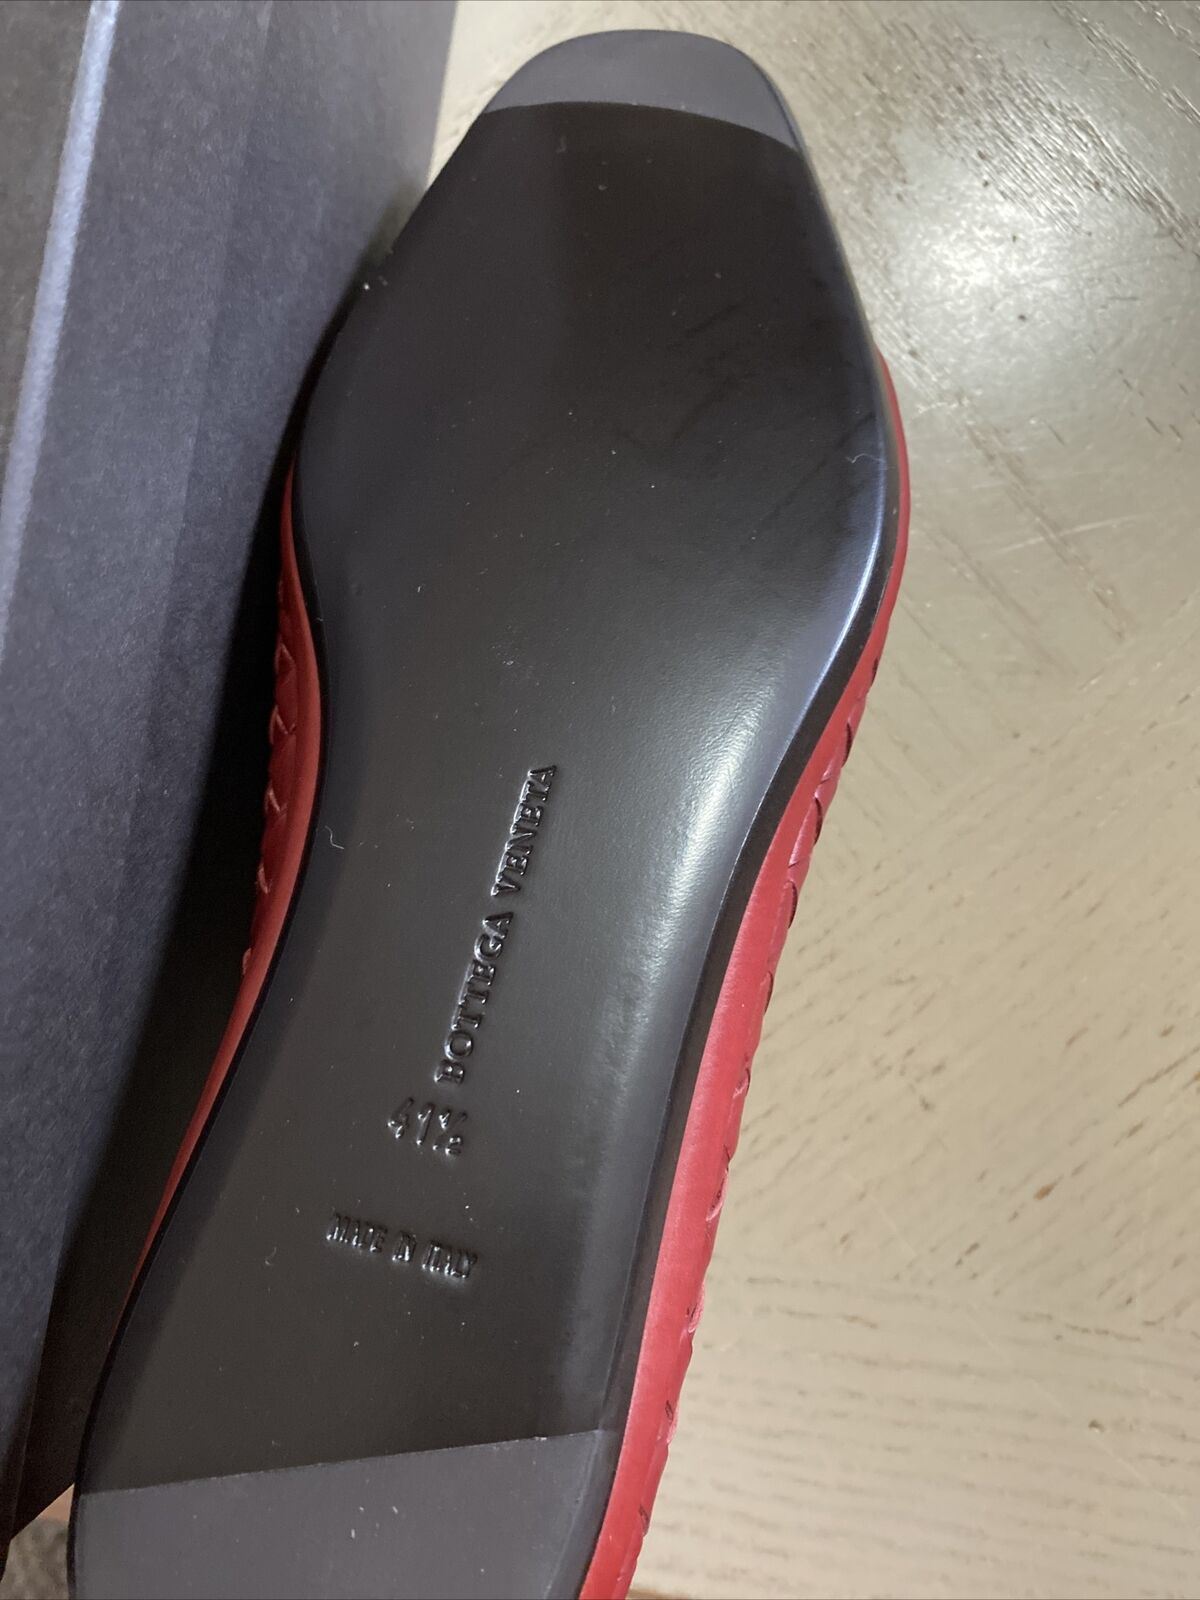 NIB $810 Bottega Veneta Men Leather Loafers Shoes Burgundy/Red 8.5 US/41.5 Eu